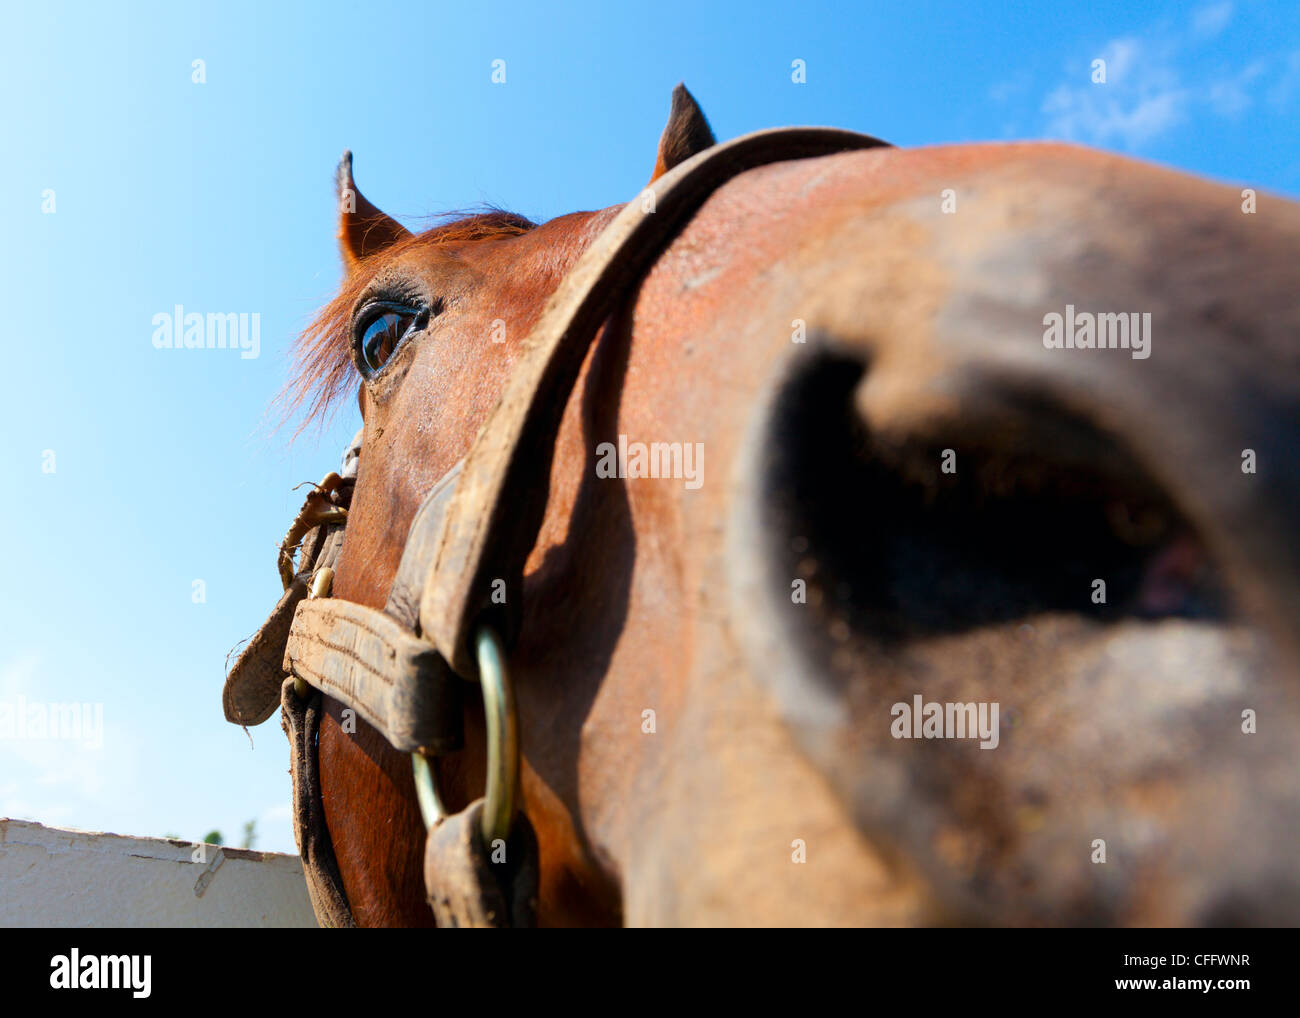 Closeup of a horse snout Stock Photo